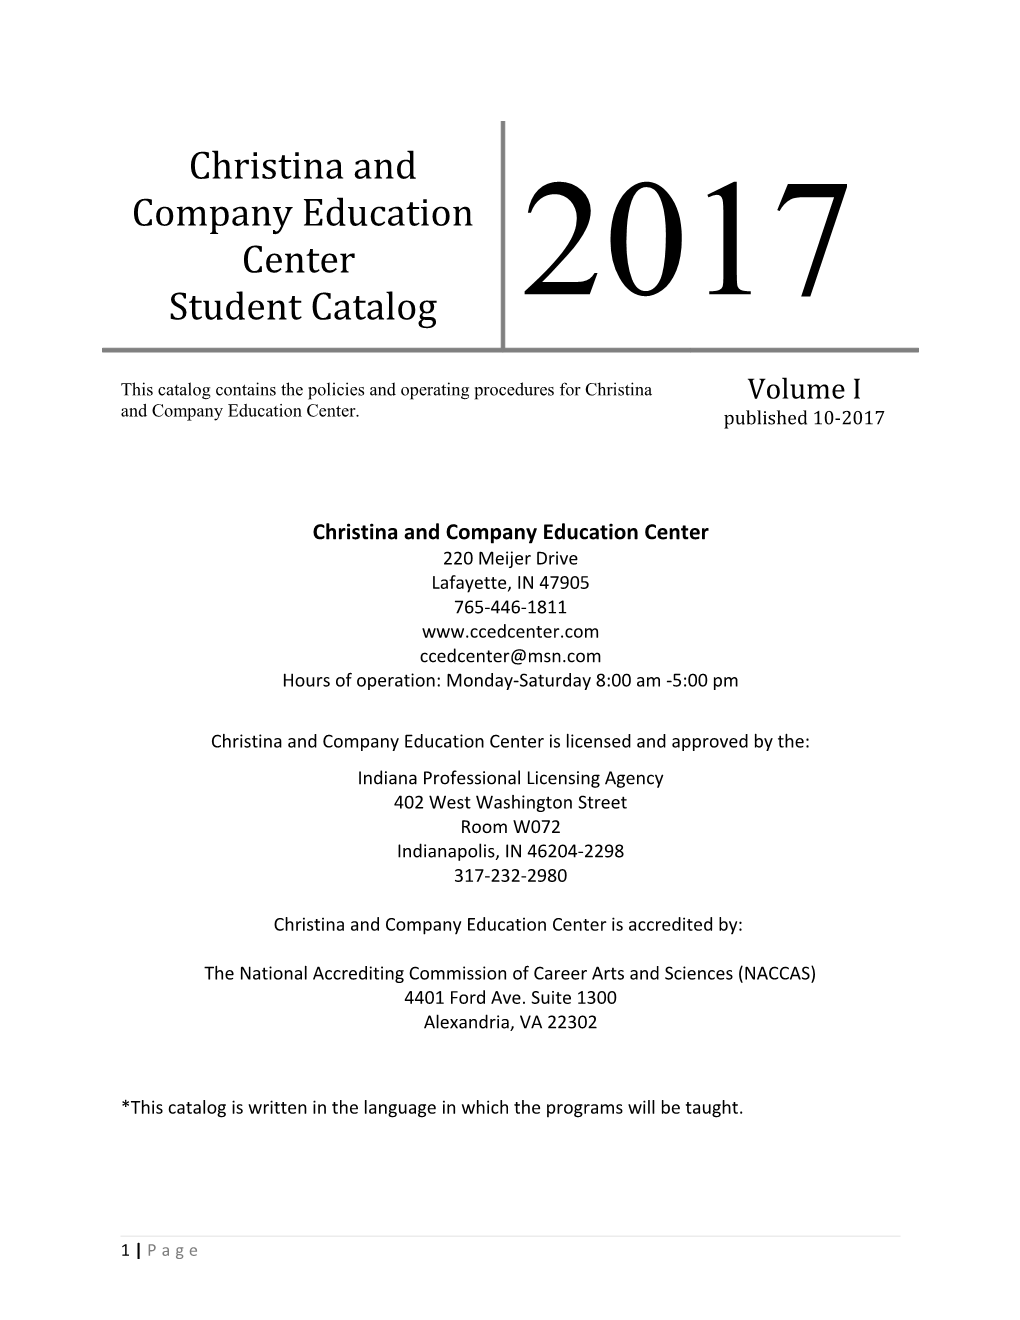 Christina and Company Education Center